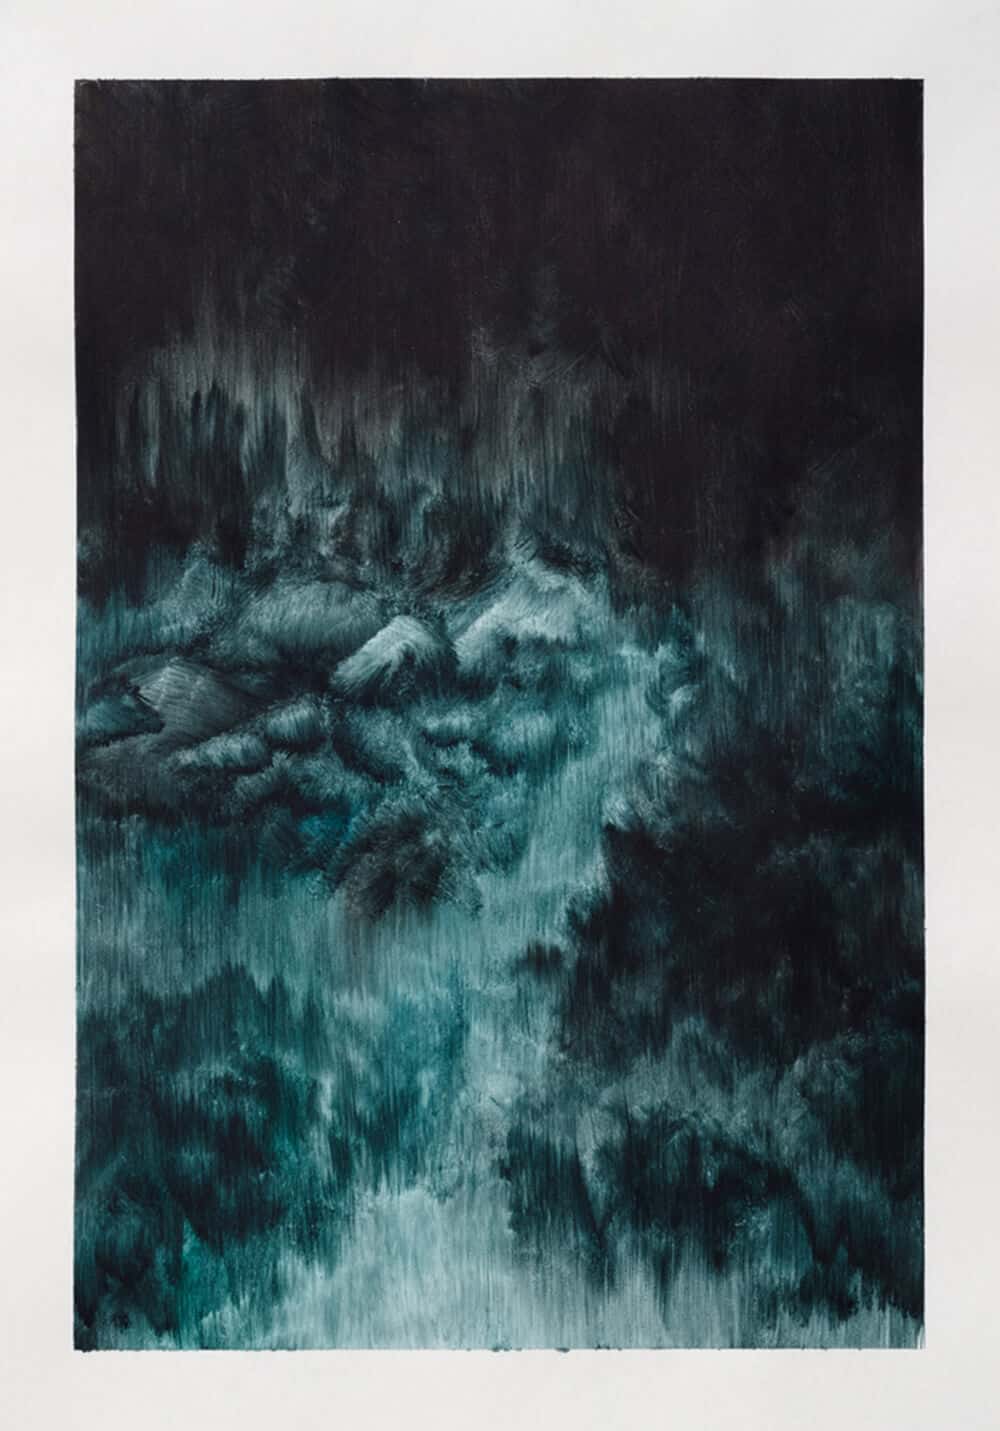 ZARAH CASSIM. Fall Into, 2017. Oil on paper. 350 x 265mm. Framed